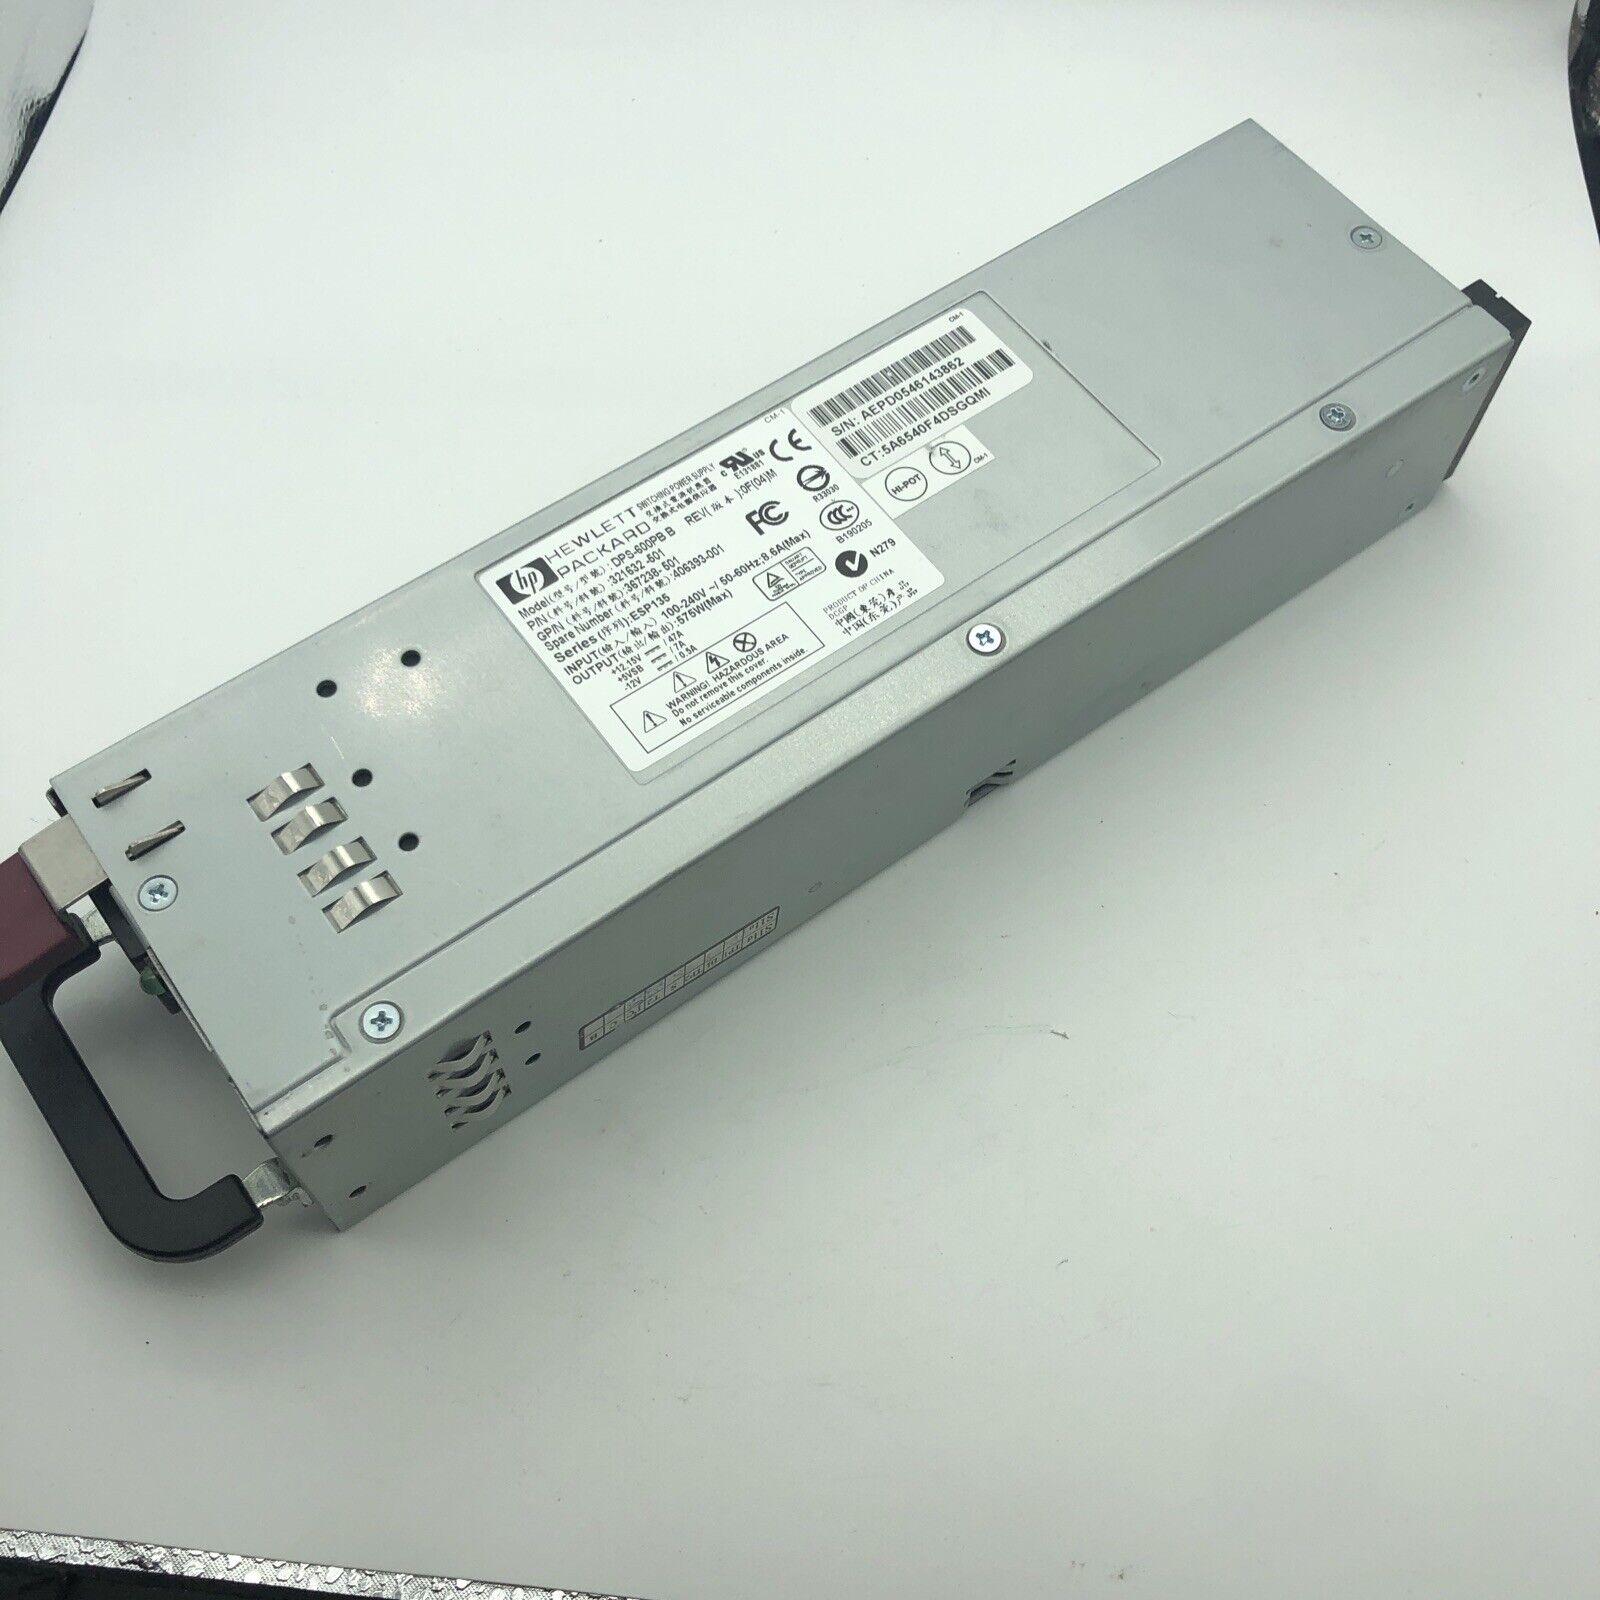 HP DPS-600PB Server Switching Power Supply ESP135 #321632 Hot Swap PS Warranty